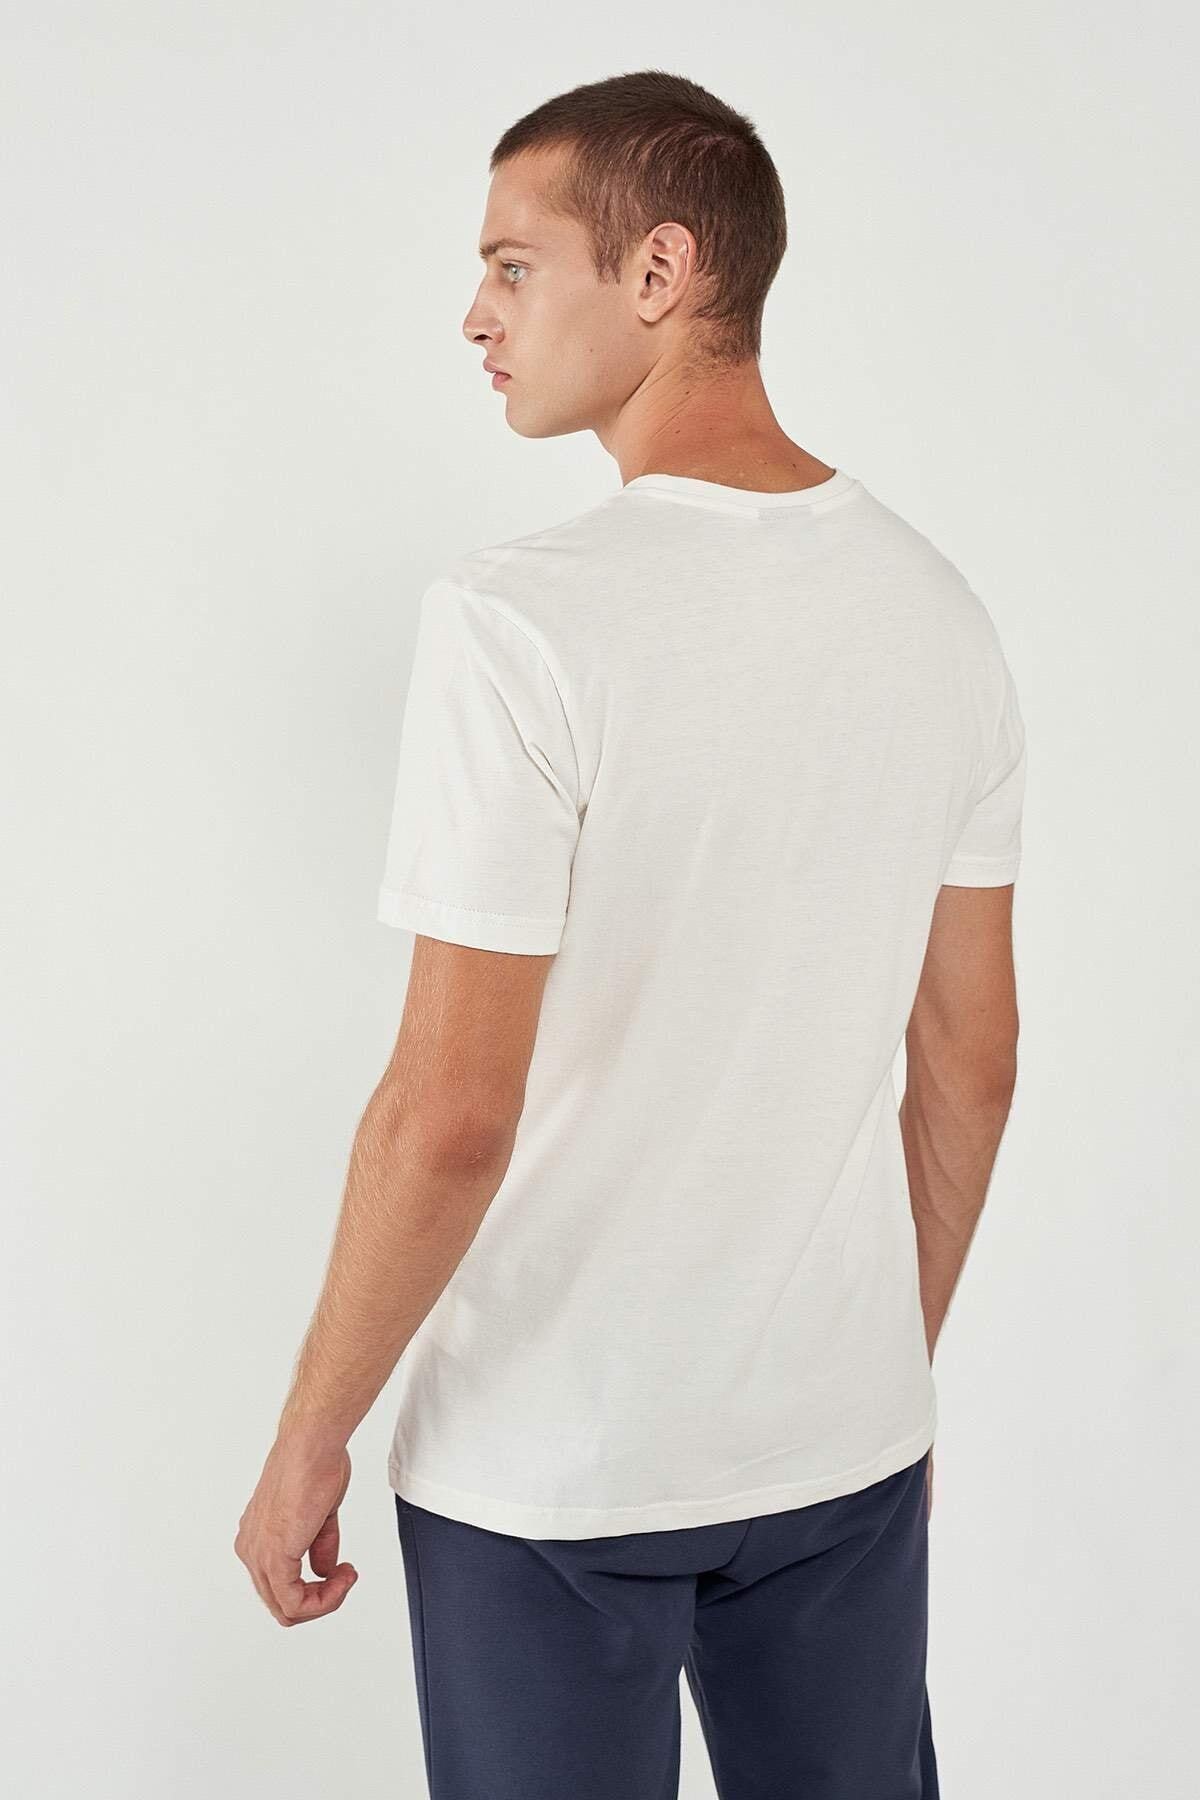 HUMMEL تی شرت Cosenza S/s مردانه آف سفید